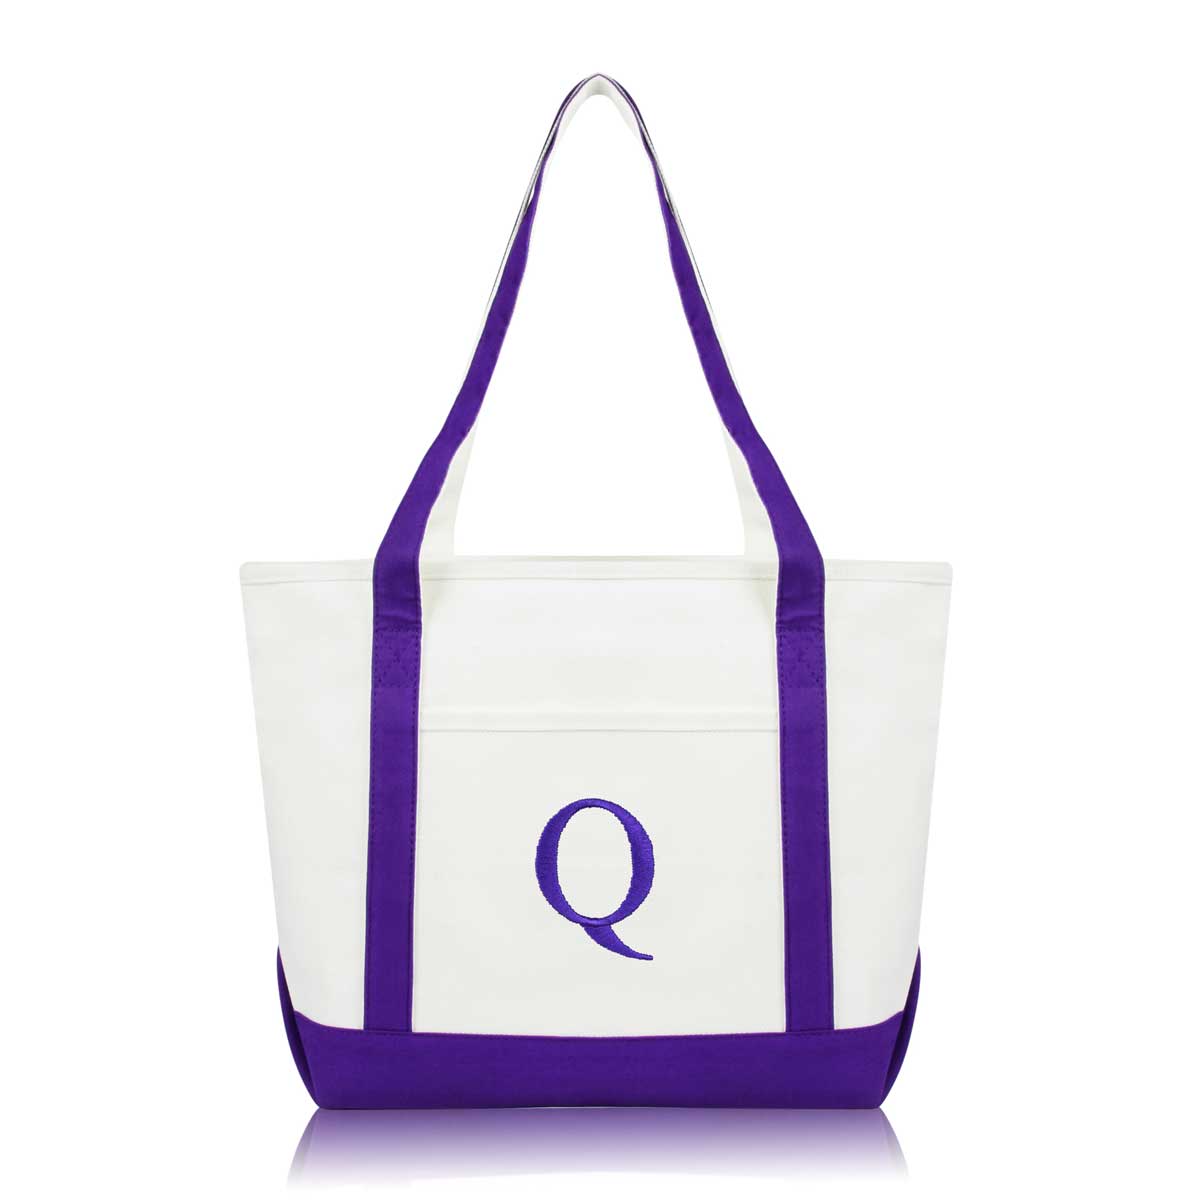 Dalix Medium Personalized Tote Bag Monogrammed Initial Letter - Q